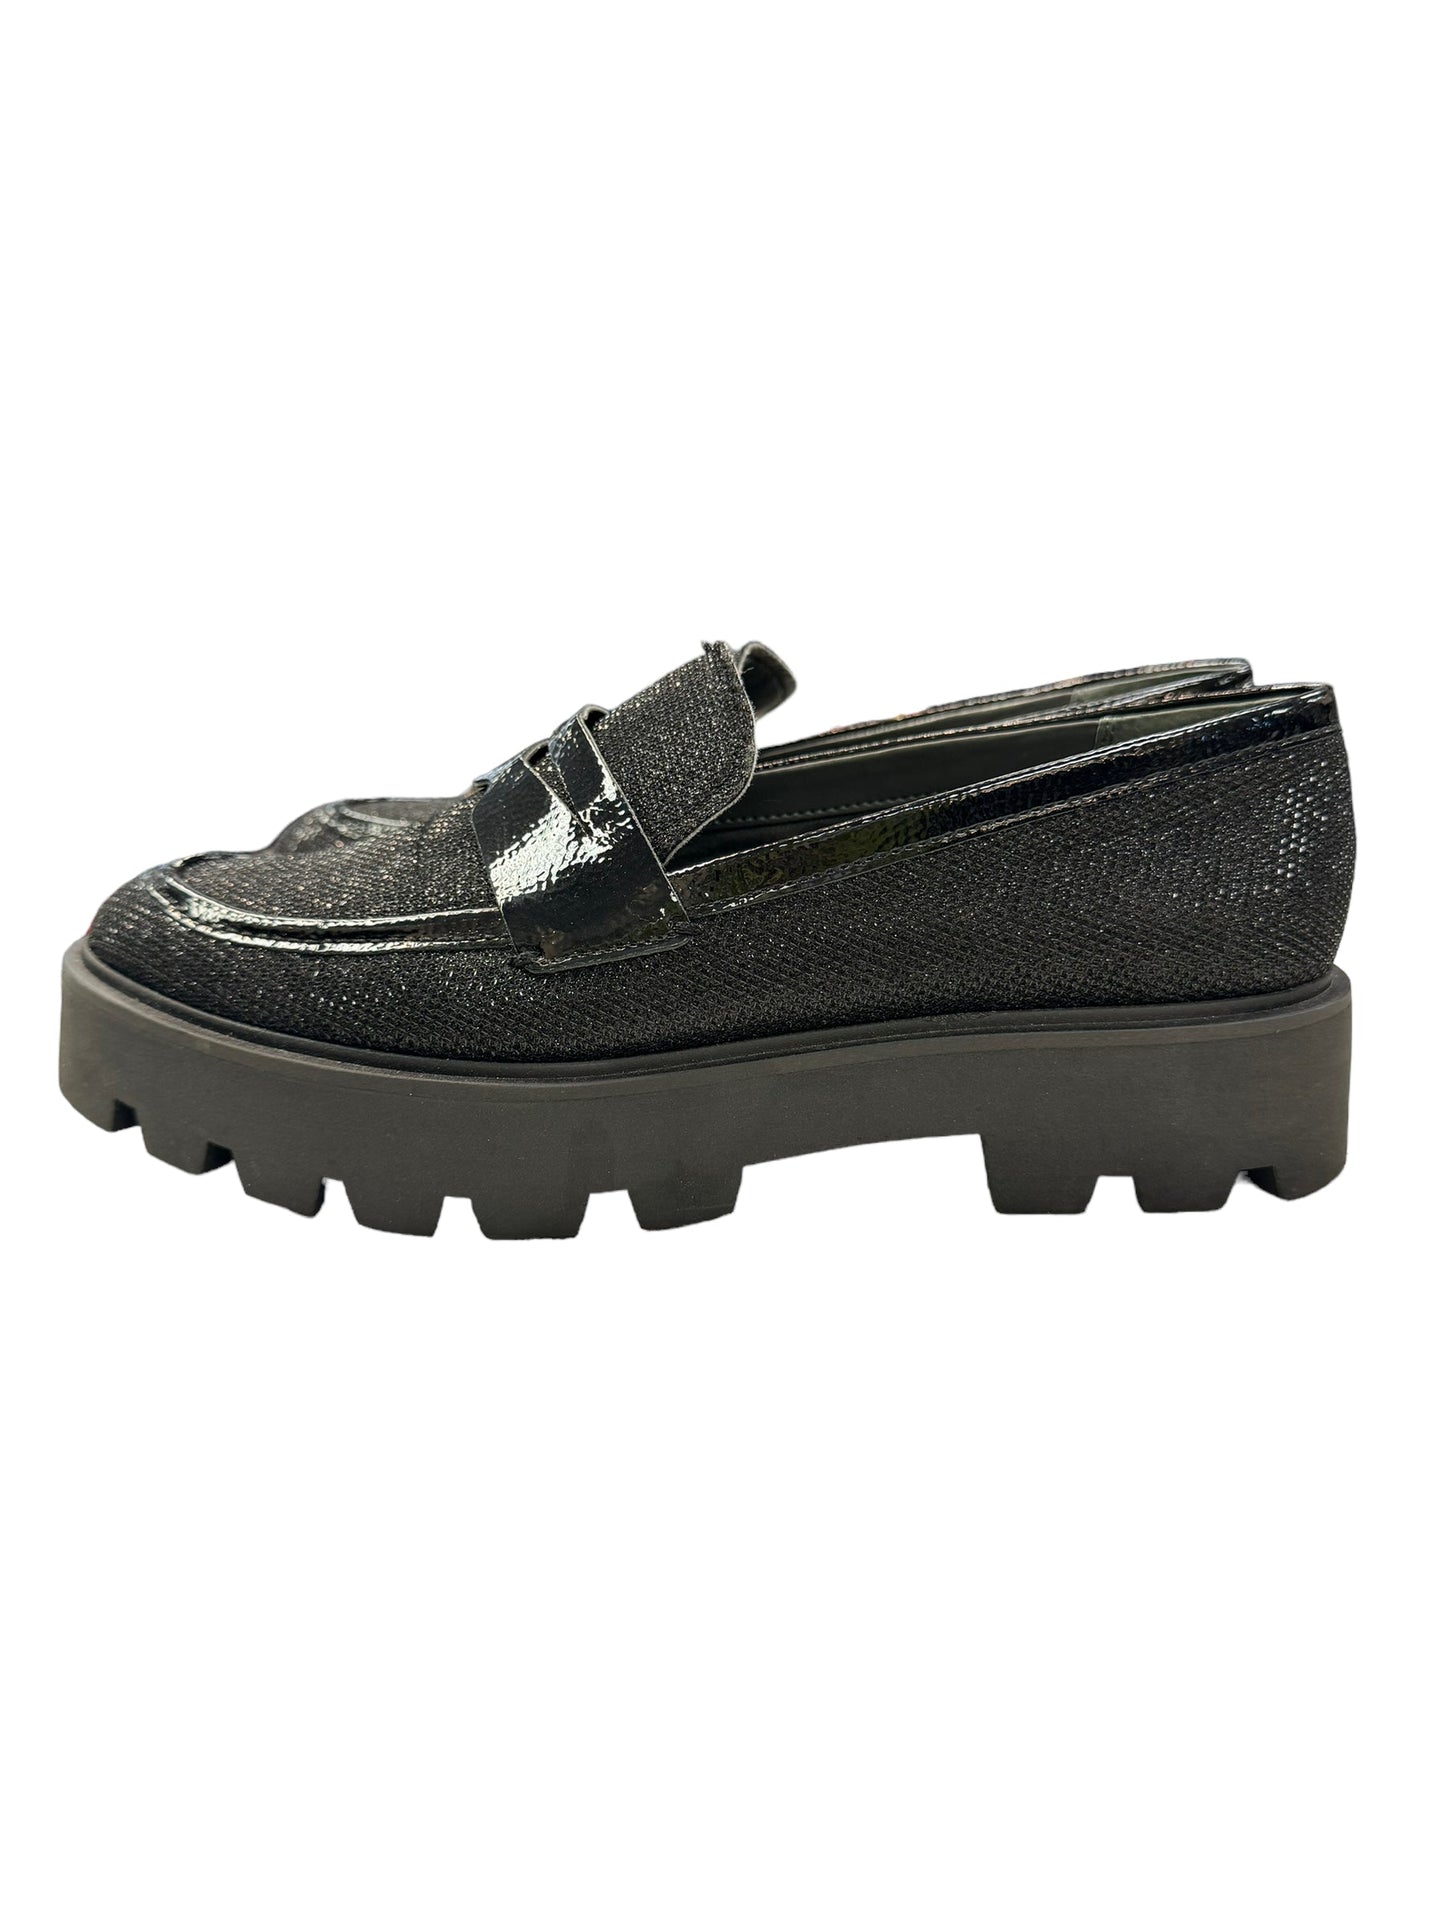 Black Shoes Heels Platform Franco Sarto, Size 8